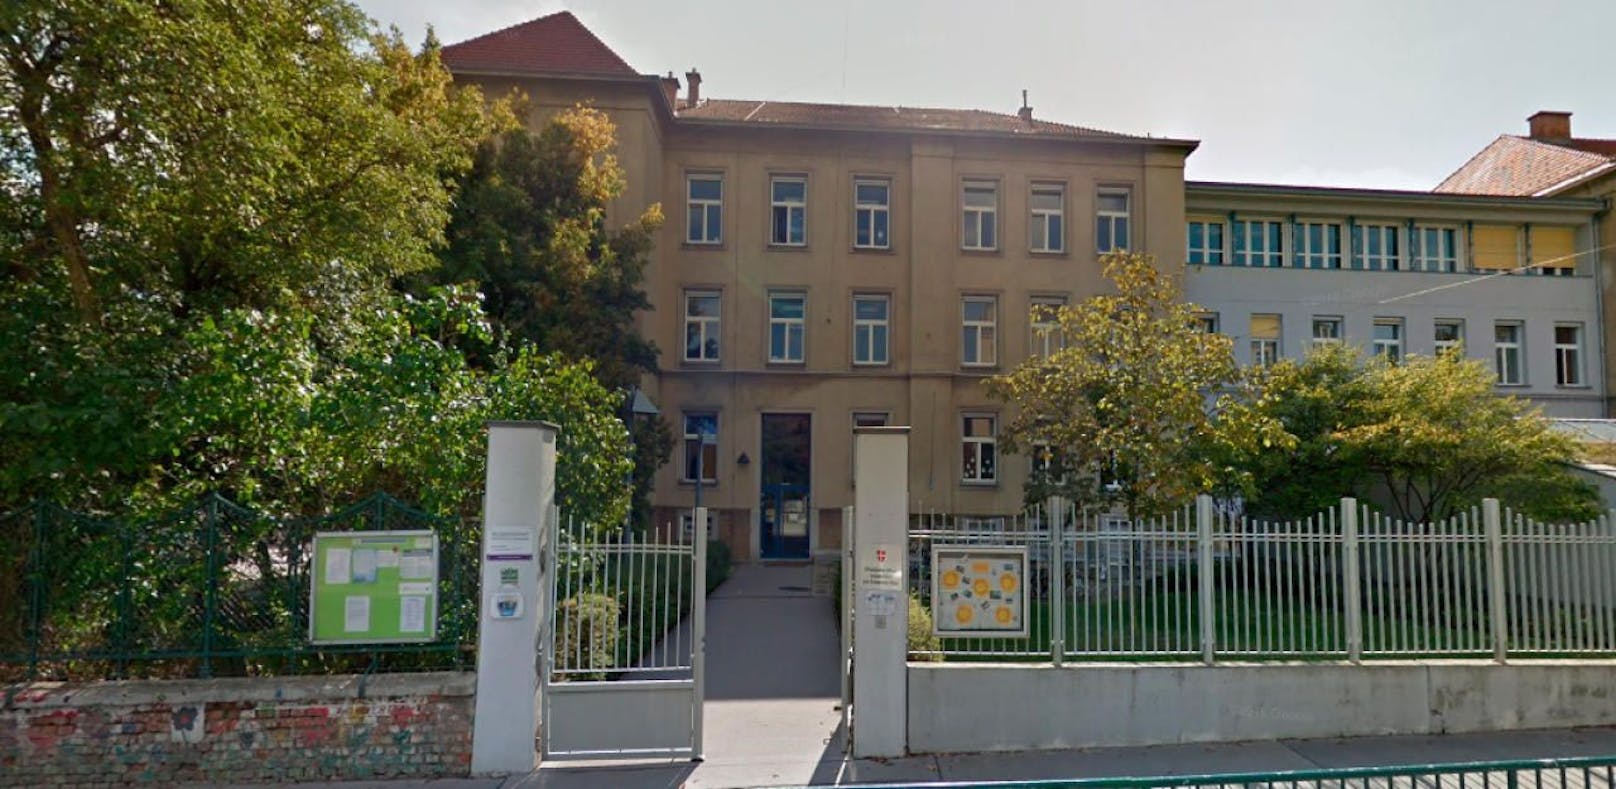 Die Wittelsbacher Volksschule in Wien-Leopoldstadt